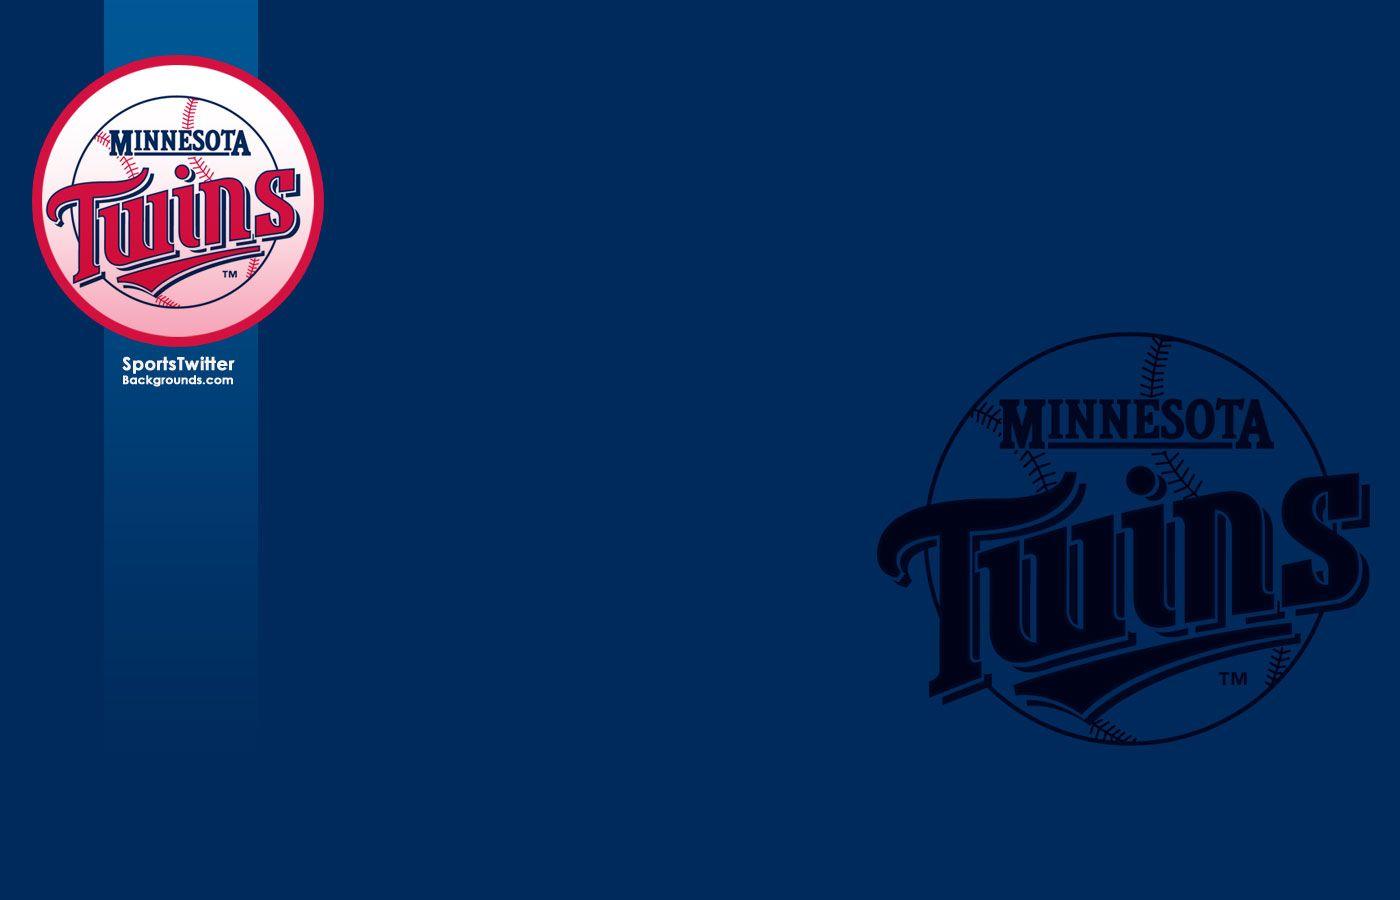 Minnesota Twins wallpaper HD & Logo Wallpaper